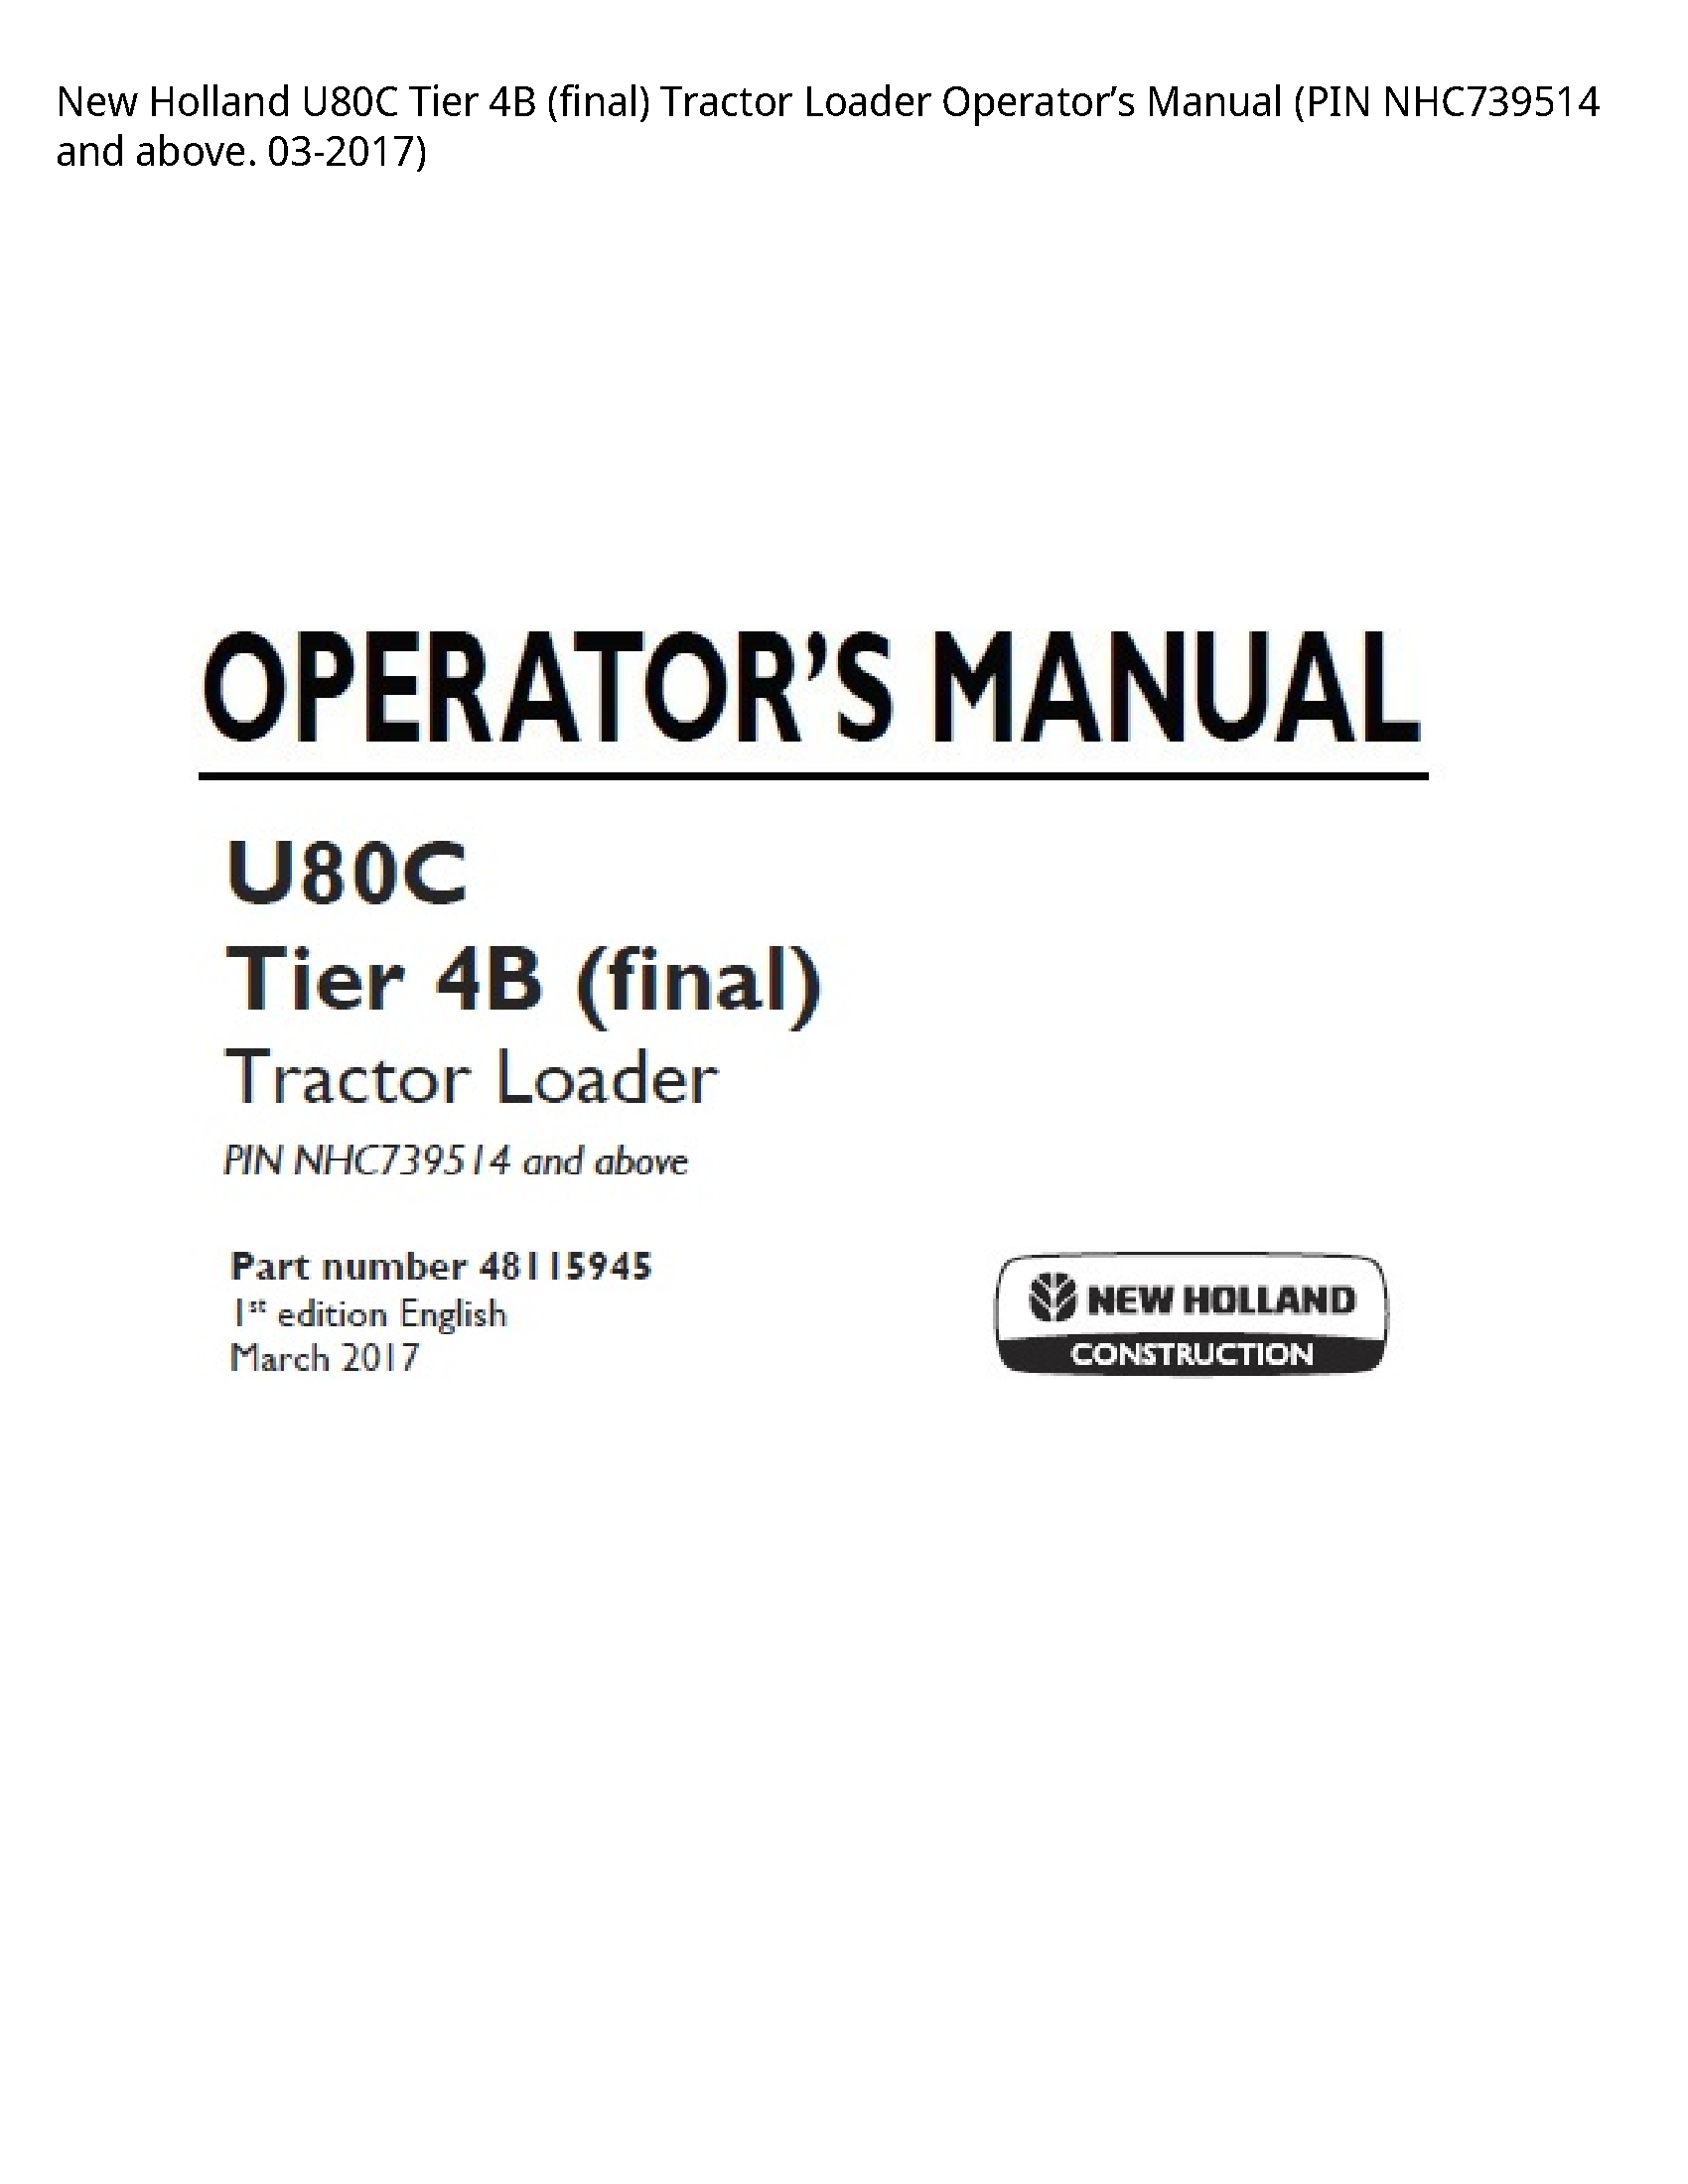 New Holland U80C Tier (final) Tractor Loader Operator’s manual